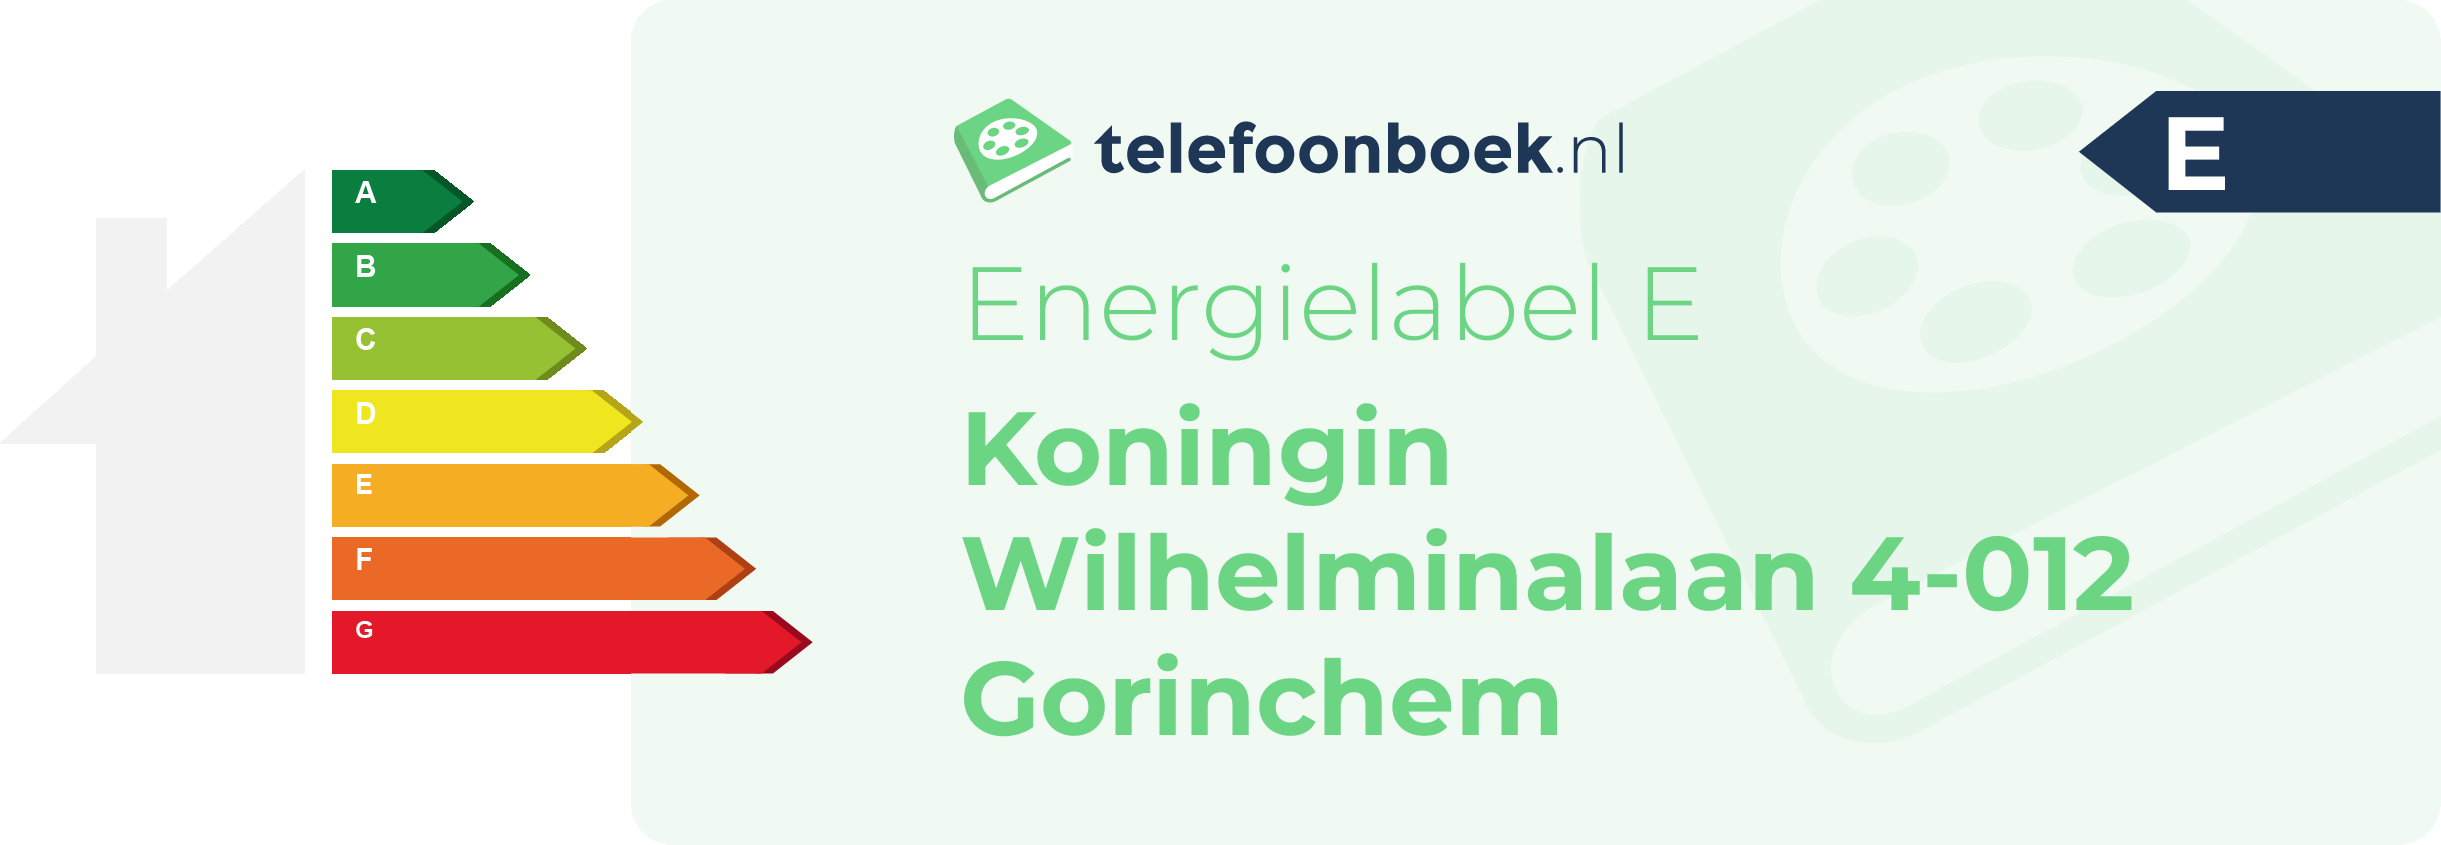 Energielabel Koningin Wilhelminalaan 4-012 Gorinchem